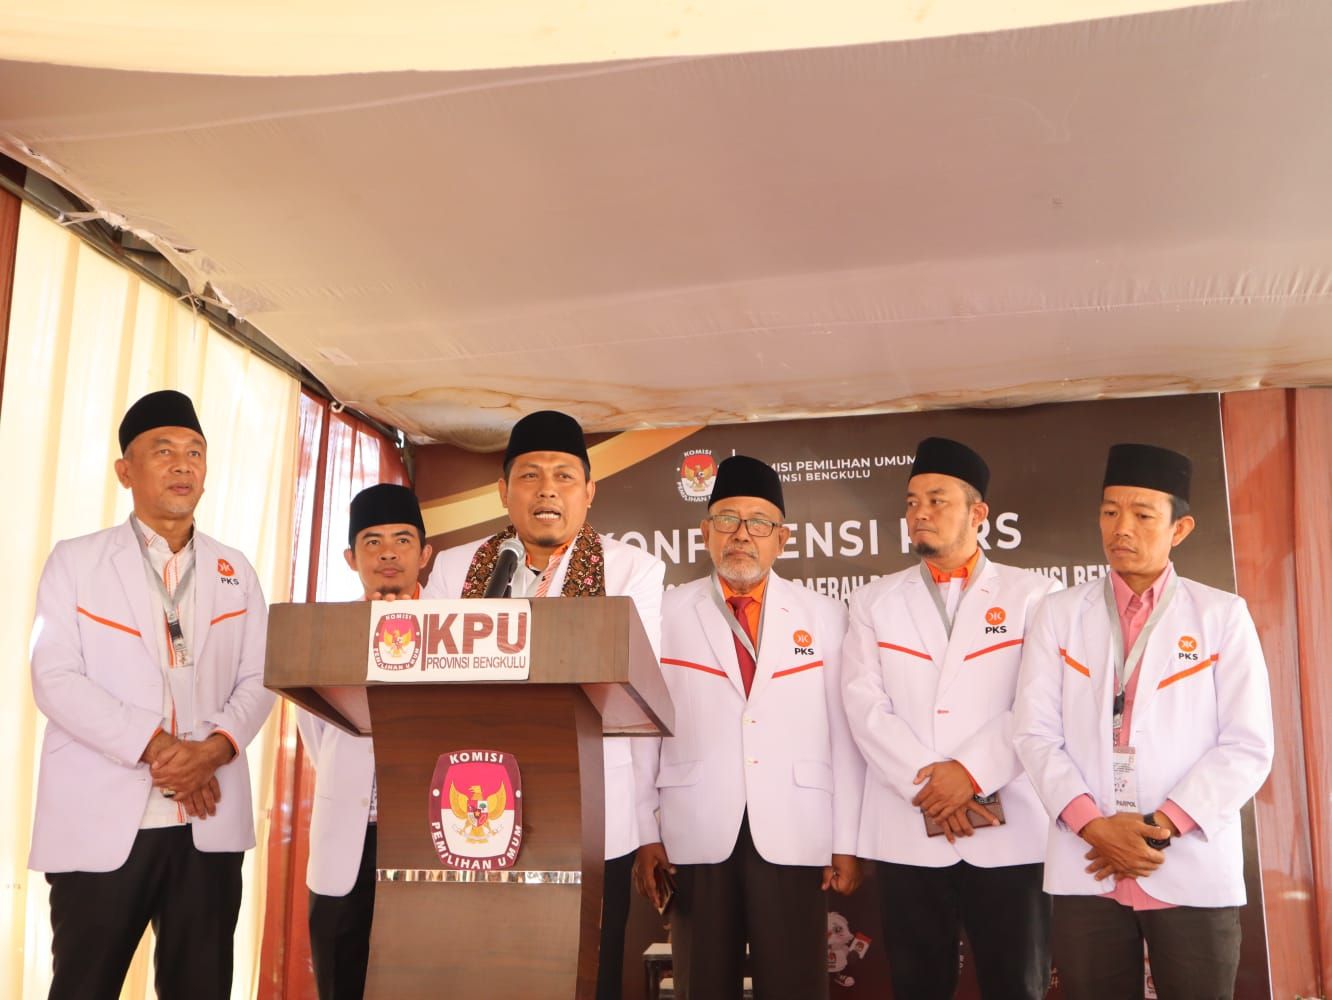 Ketua DPW PKS Provinsi Bengkulu, Sujono SP MSi menyatakan dengan bangga bahwa PKS Bengkulu menjadi partai politik pertama yang mendaftar di KPU 